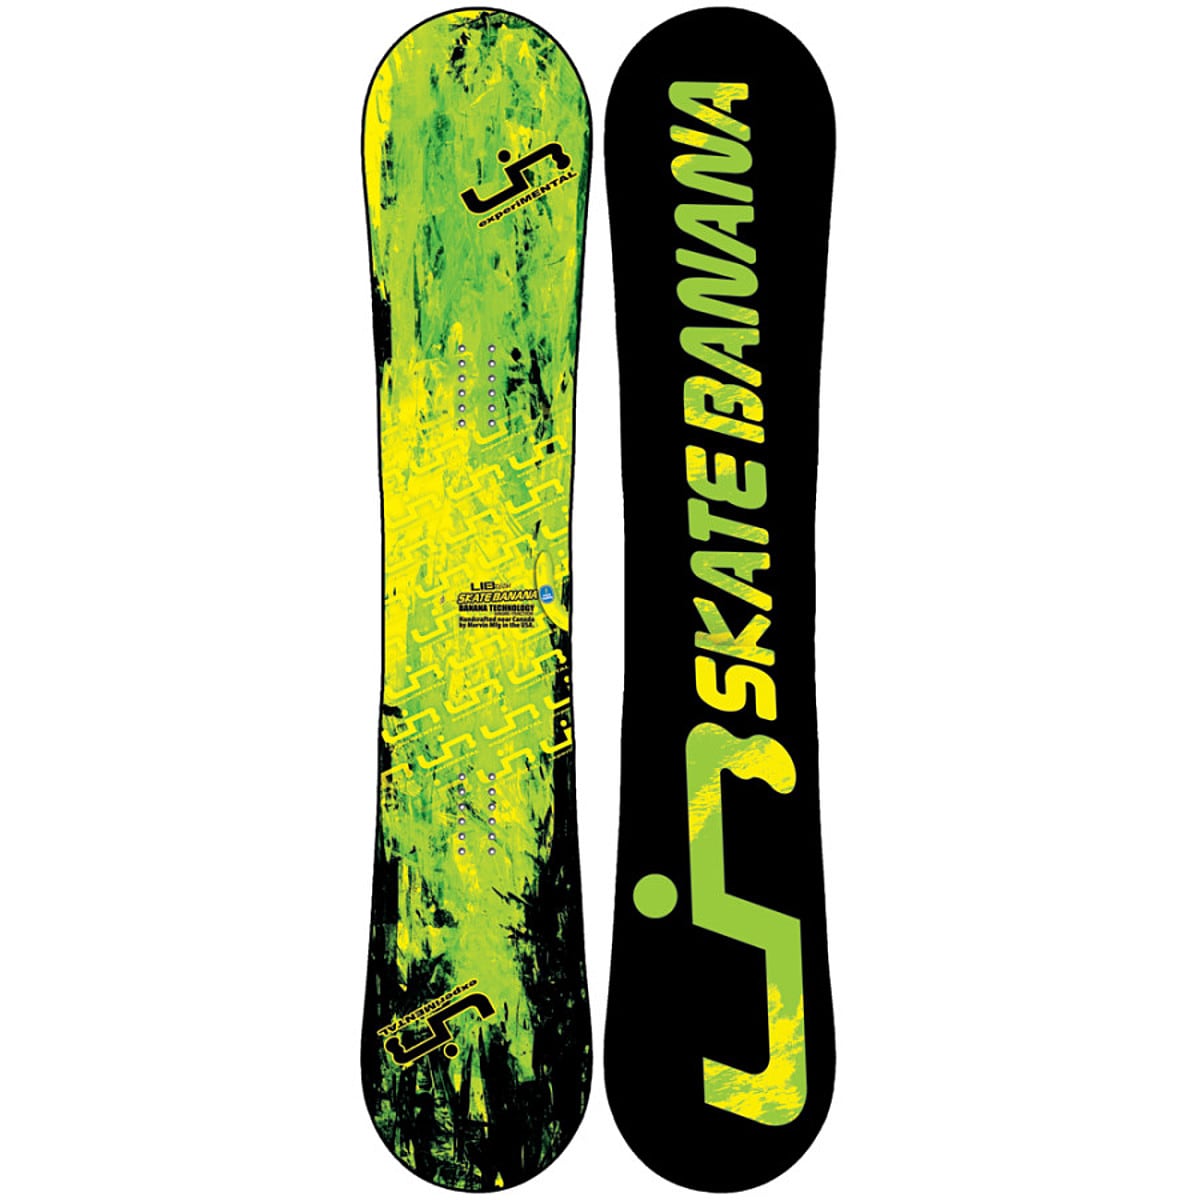 Bisschop Manoeuvreren Emuleren Lib Technologies Skate Banana Original BTX Snowboard - Snowboard